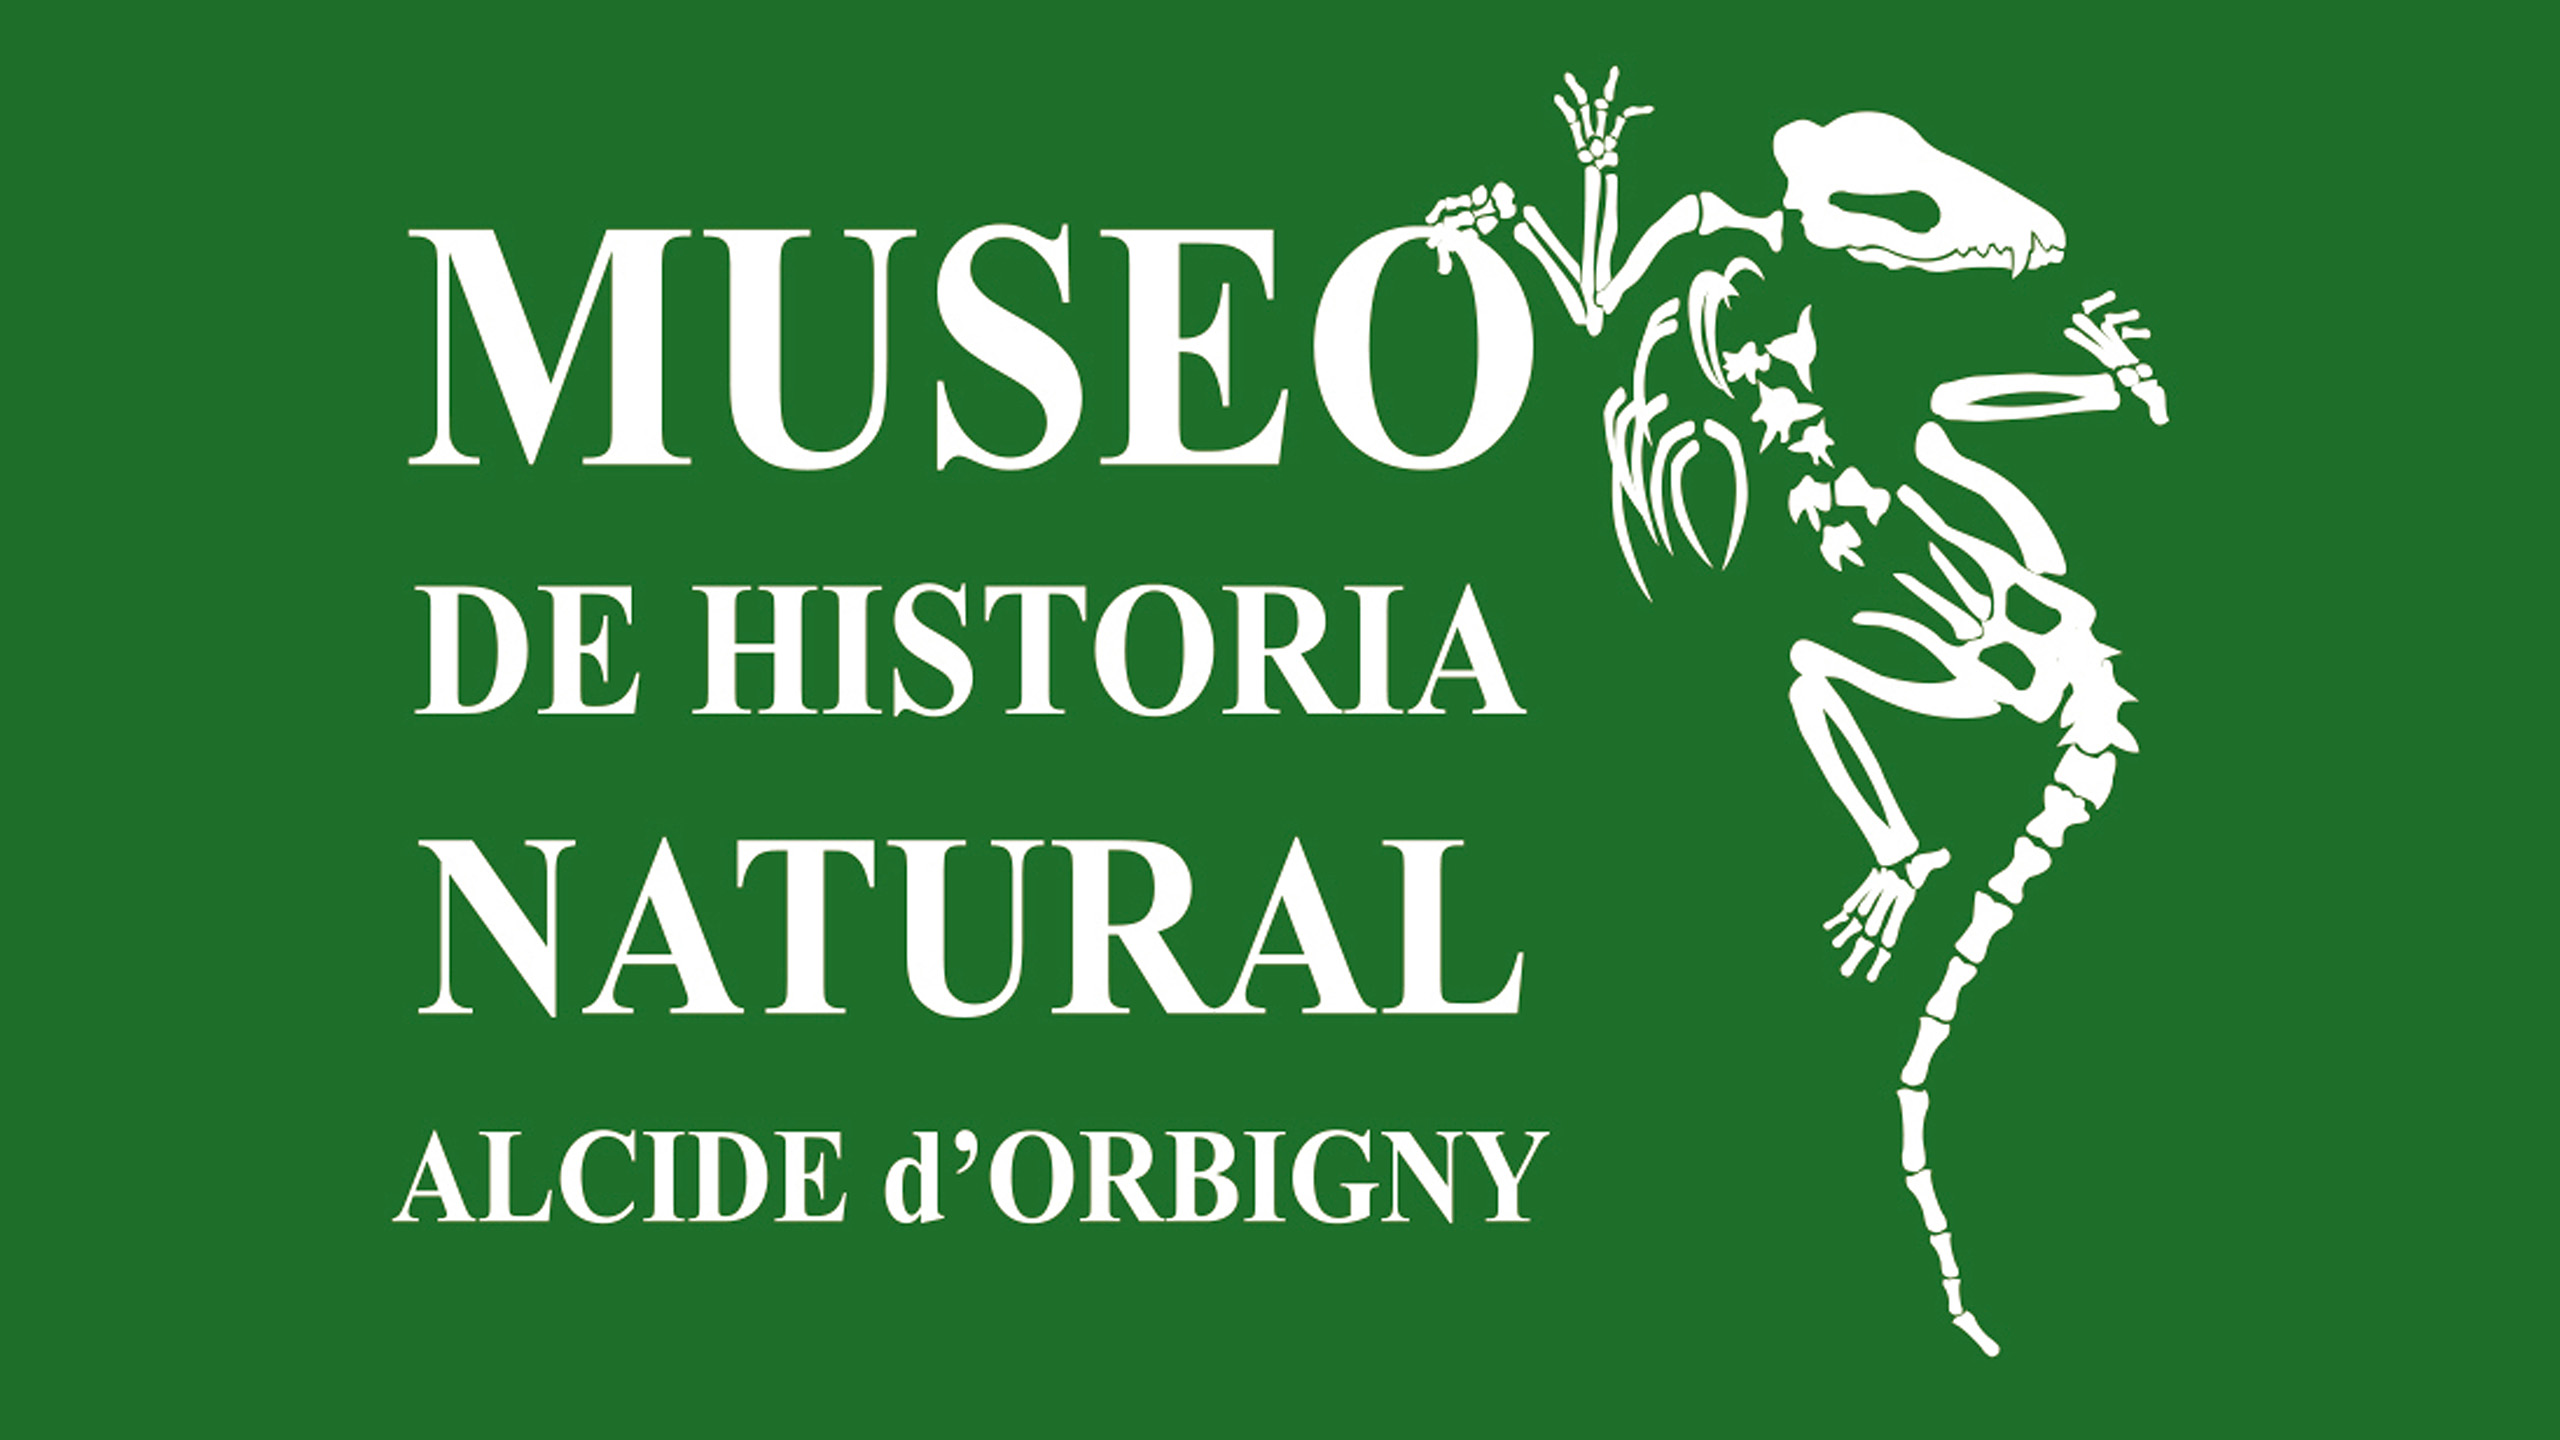 ... the logo of the project partner Museo de Historia Natural Alcide d'Orbigny.